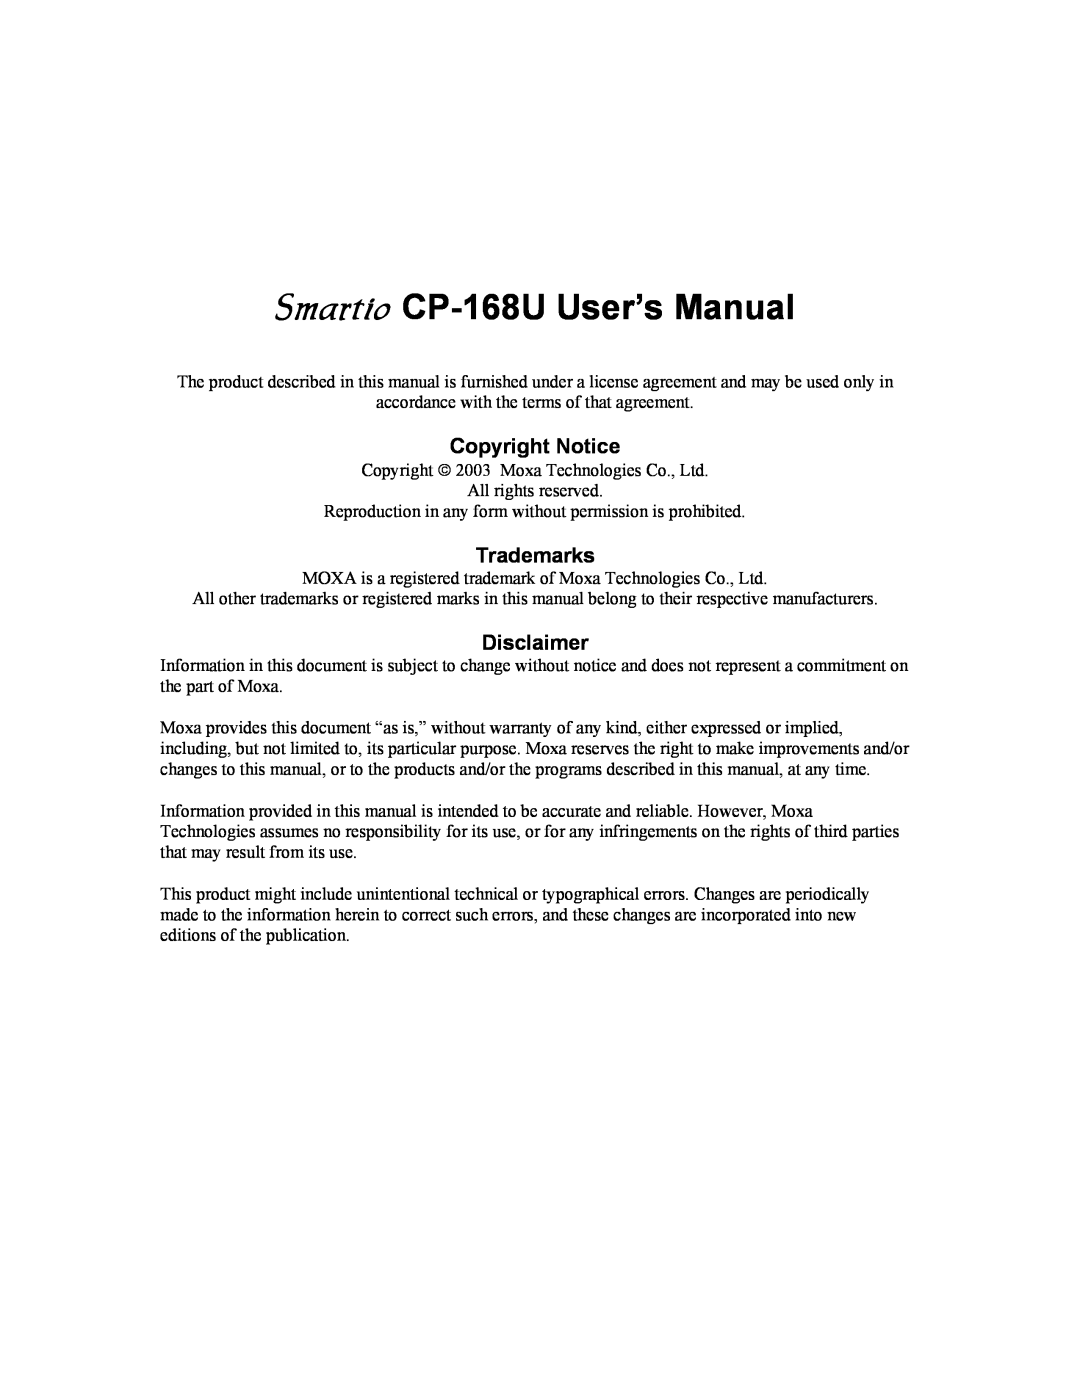 Moxa Technologies user manual Smartio CP-168U User’s Manual, Copyright Notice, Trademarks, Disclaimer 